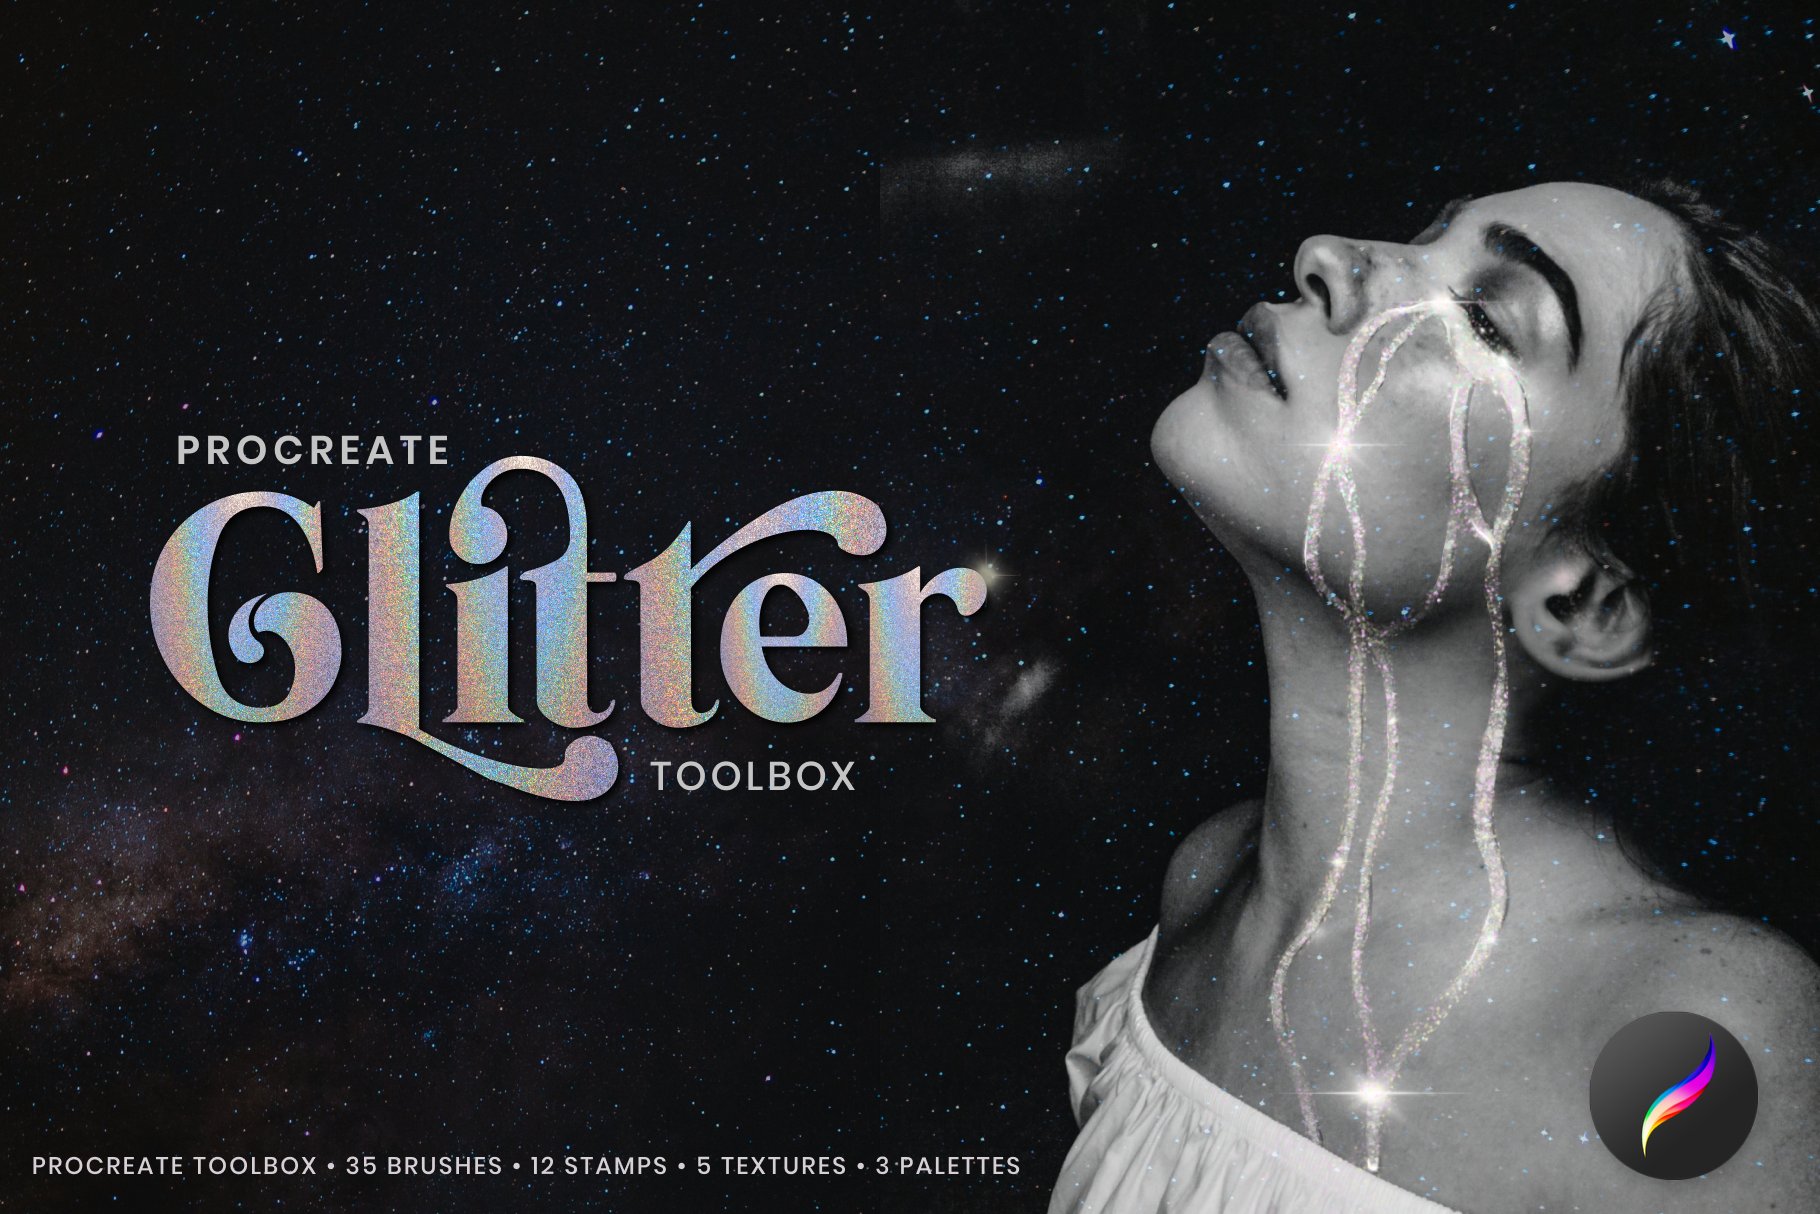 Procreate Glitter Toolbox: Brush Kit 6381131